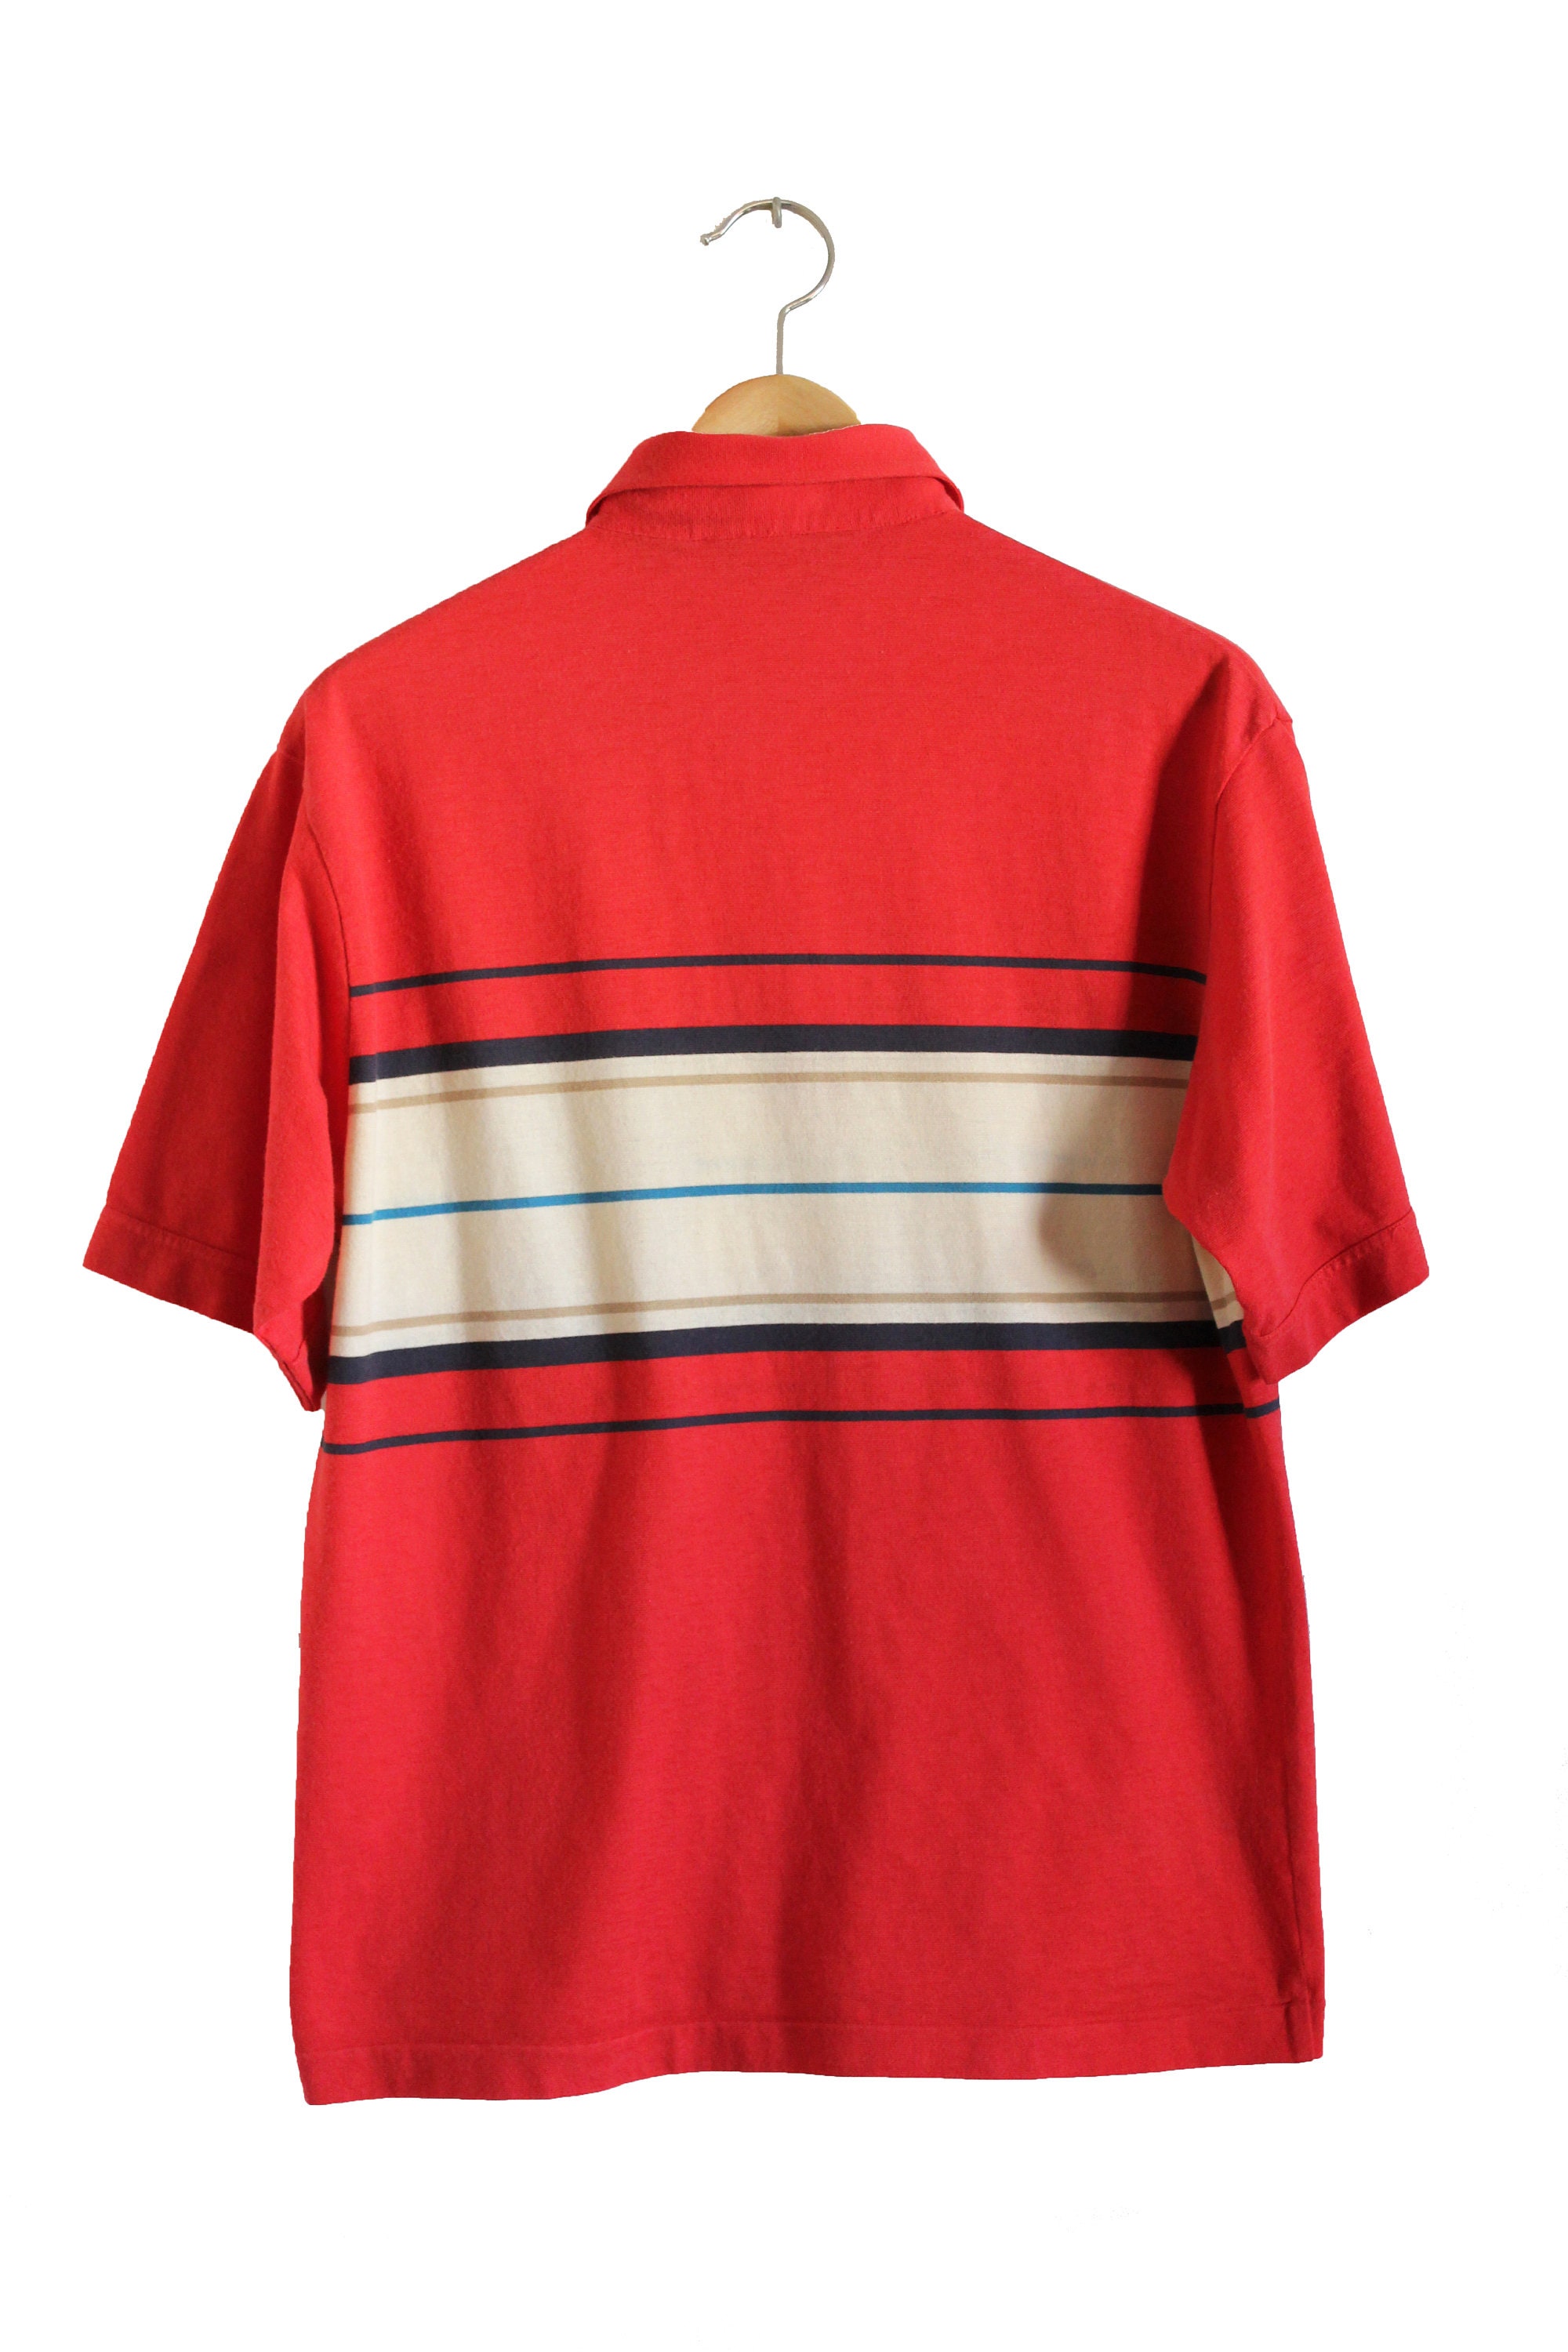 Vintage Polo Shirt Par Four Polo Shirt 80s 90s / Medium / - Etsy